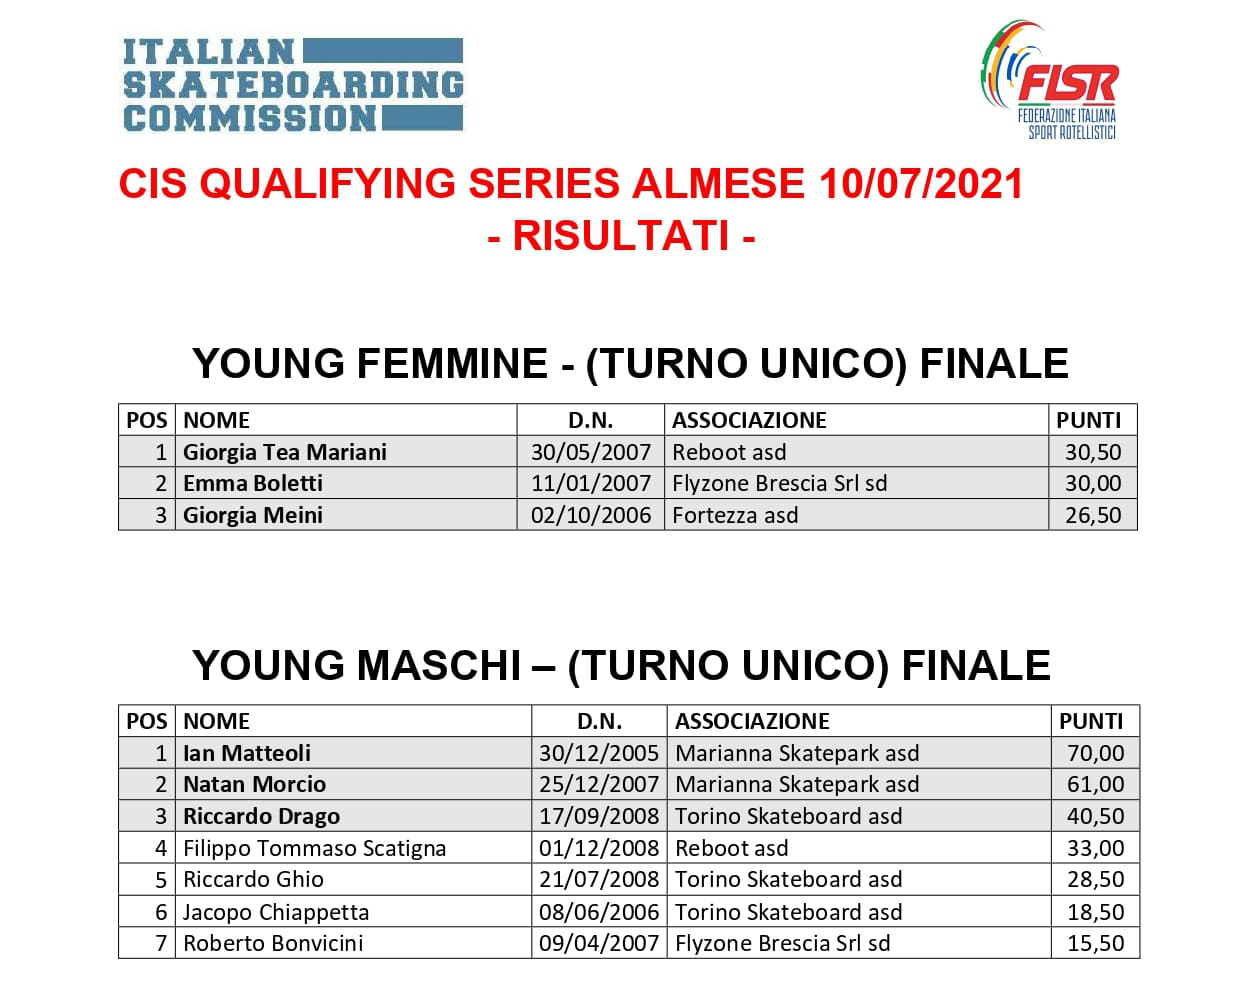 Risultati Qualifying Series Almese - YOUNG